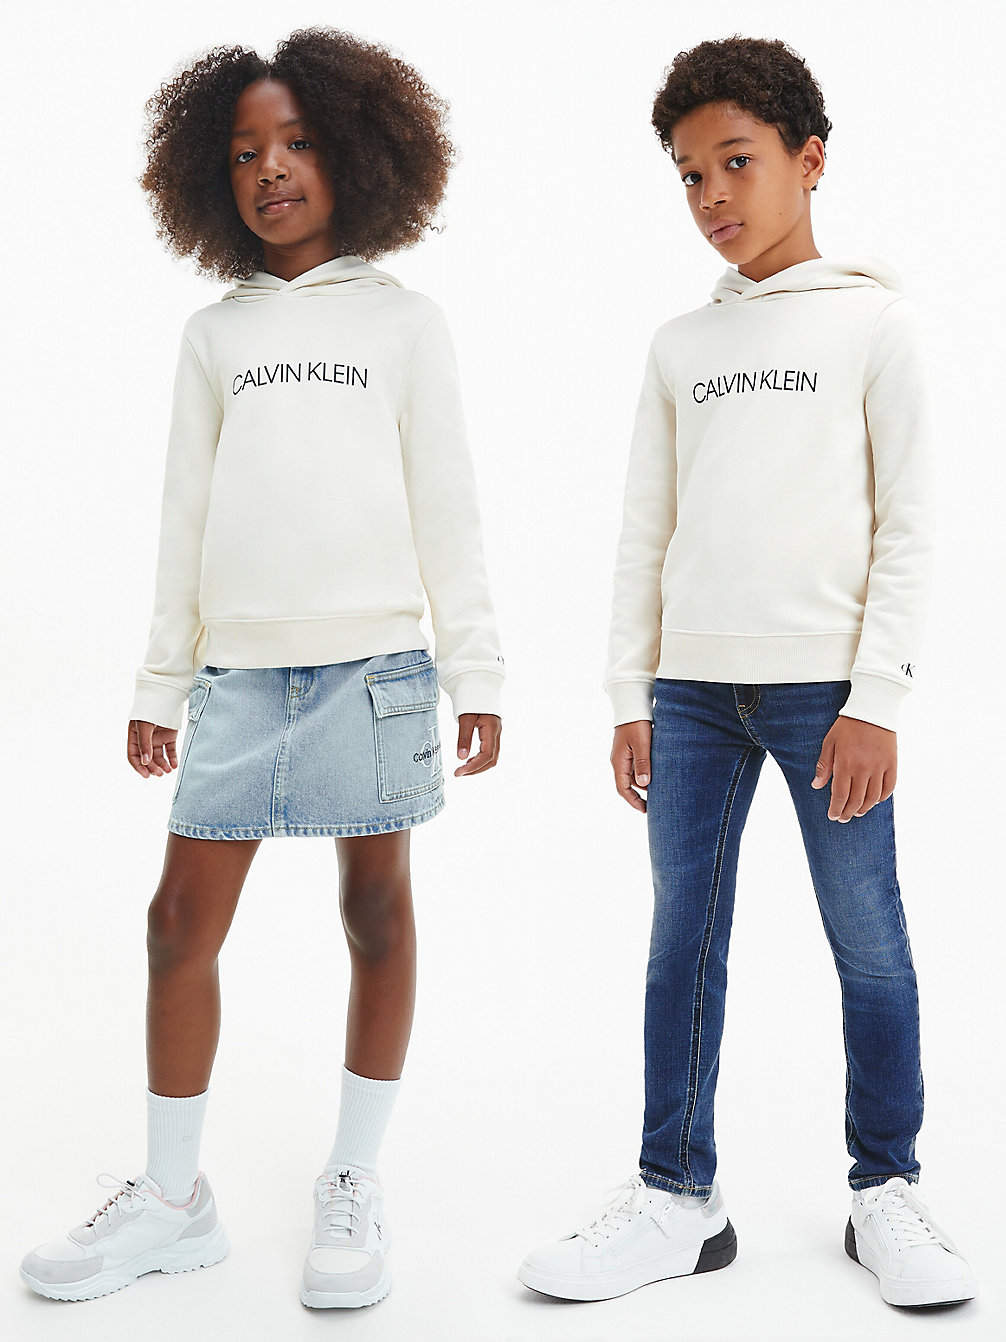 MUSLIN > Unisex Hoodie Met Logo > undefined kids unisex - Calvin Klein